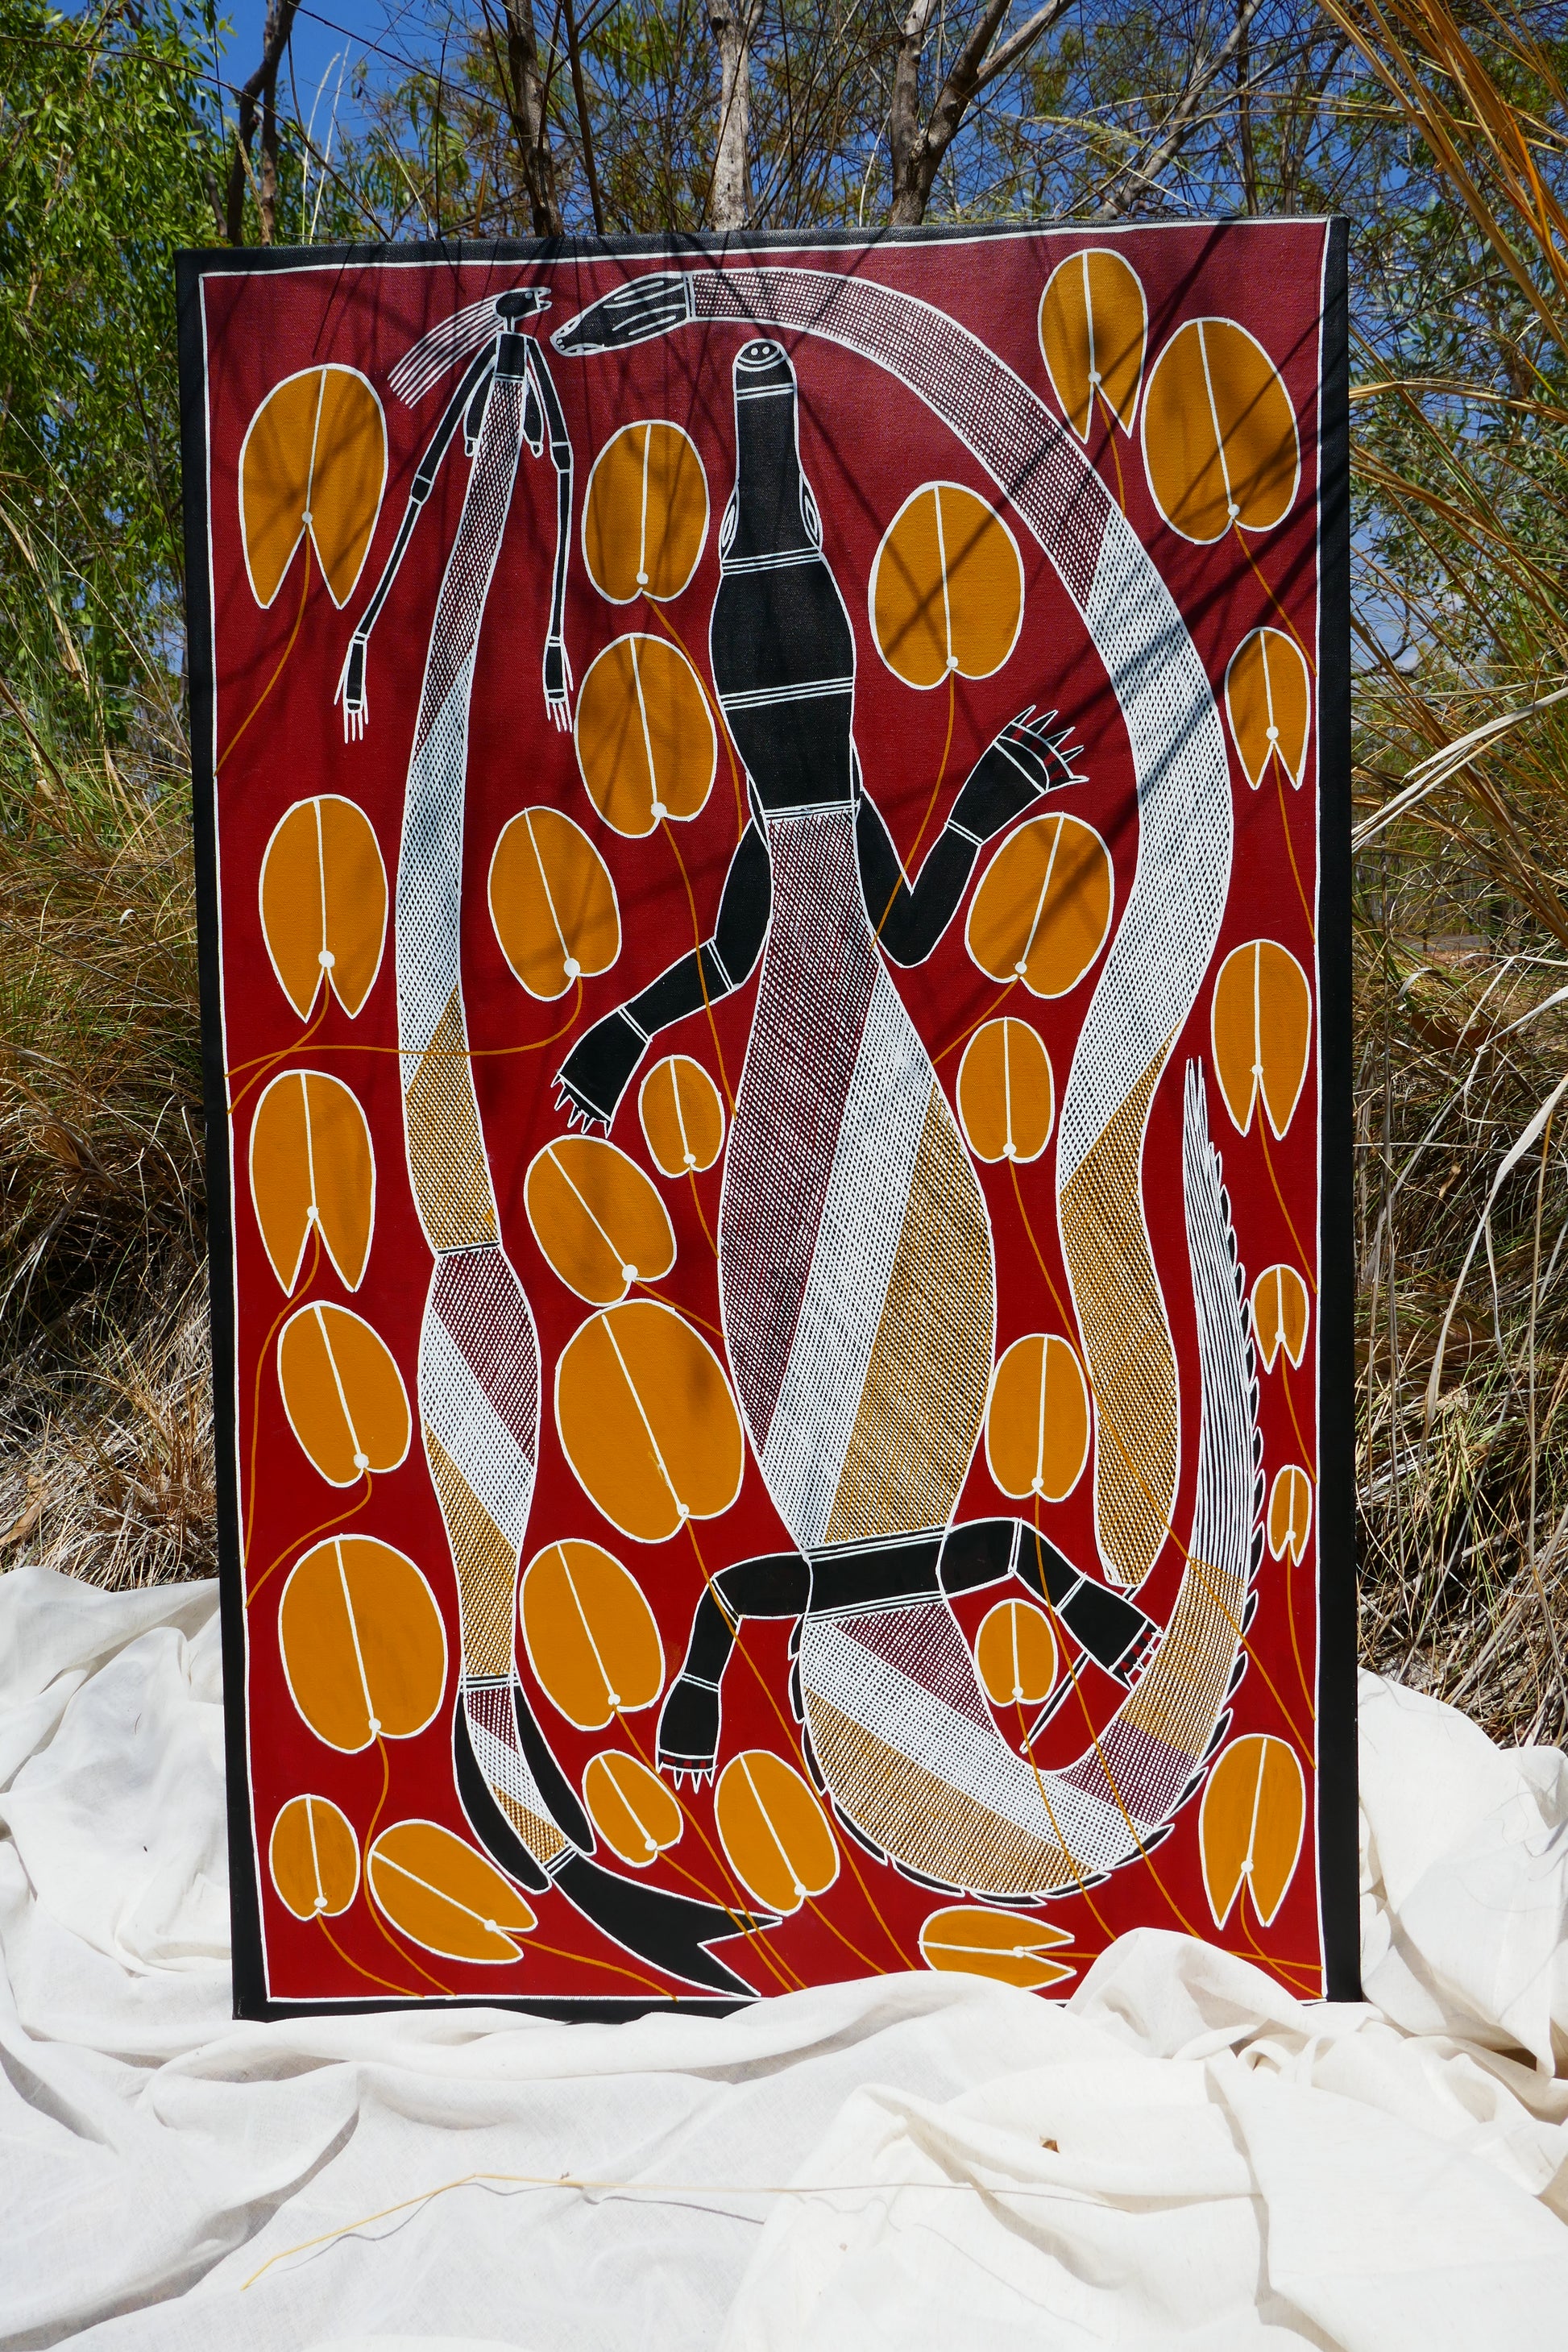 Authentic Aboriginal artwork by Bininj artist of Kakadu National Park